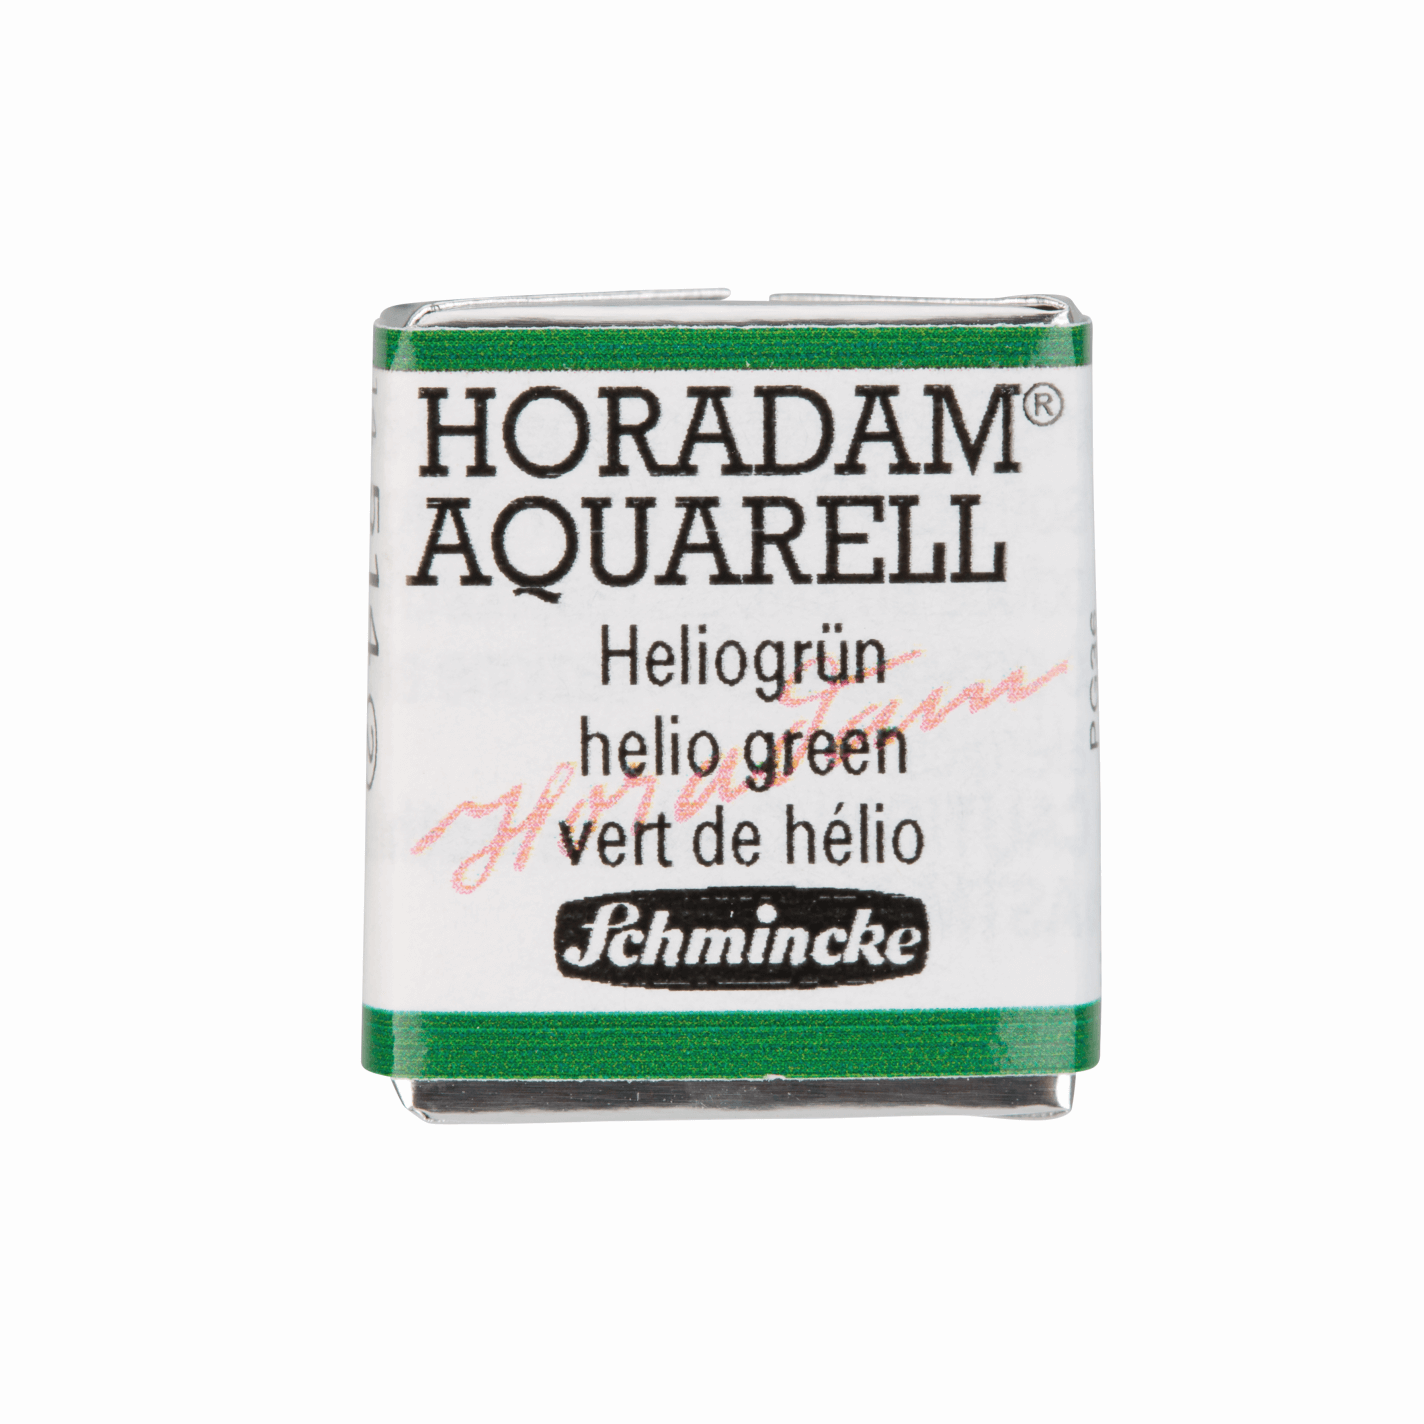 Schmincke Horadam Aquarell pans 1/2 pan Helio Green